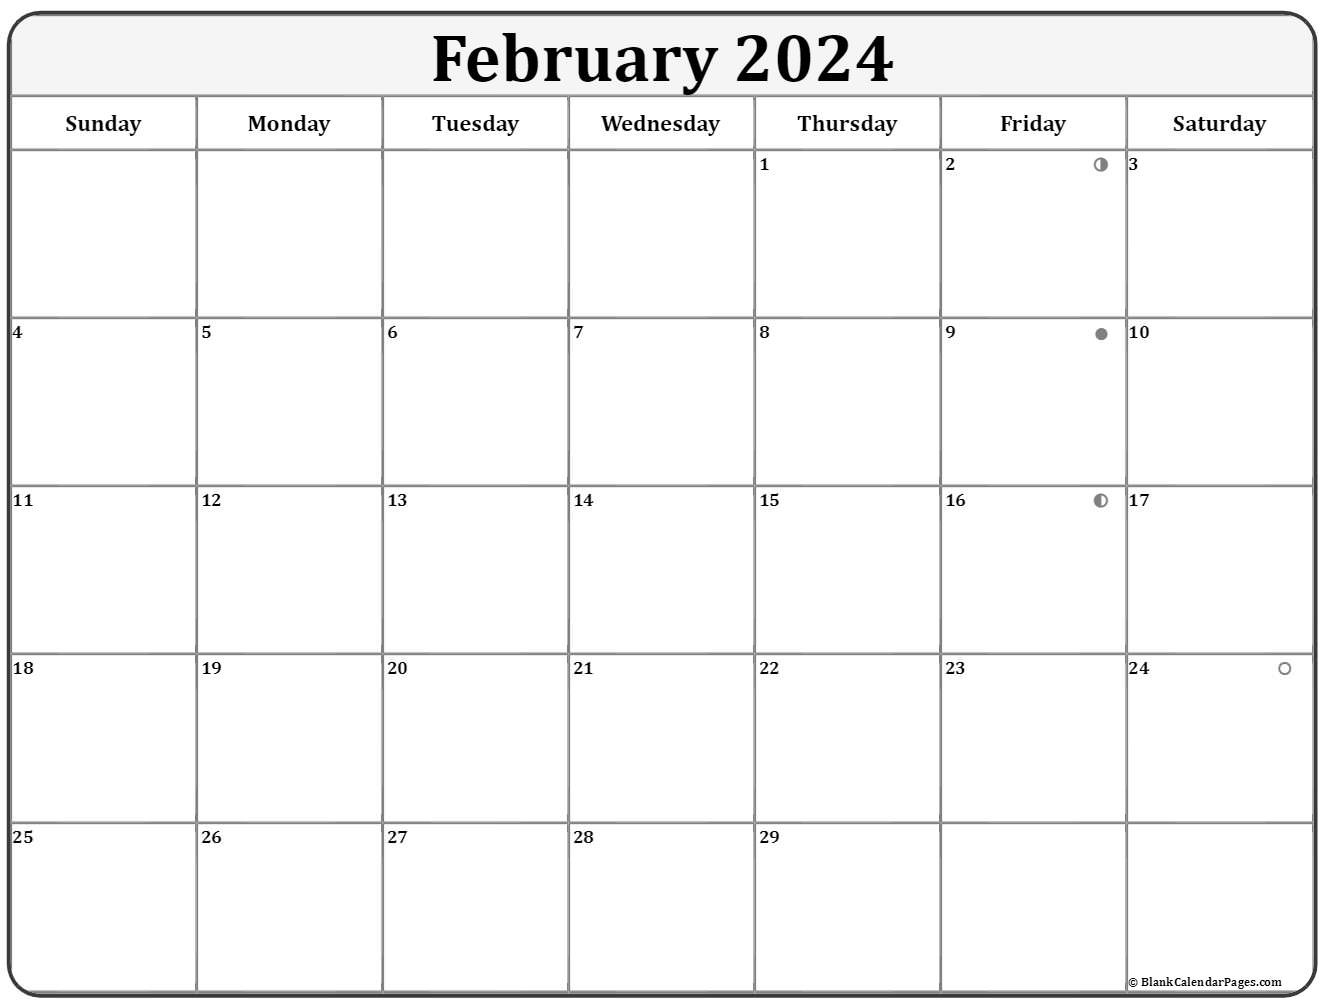 February 2021 Lunar Calendar | Moon Phase Calendar